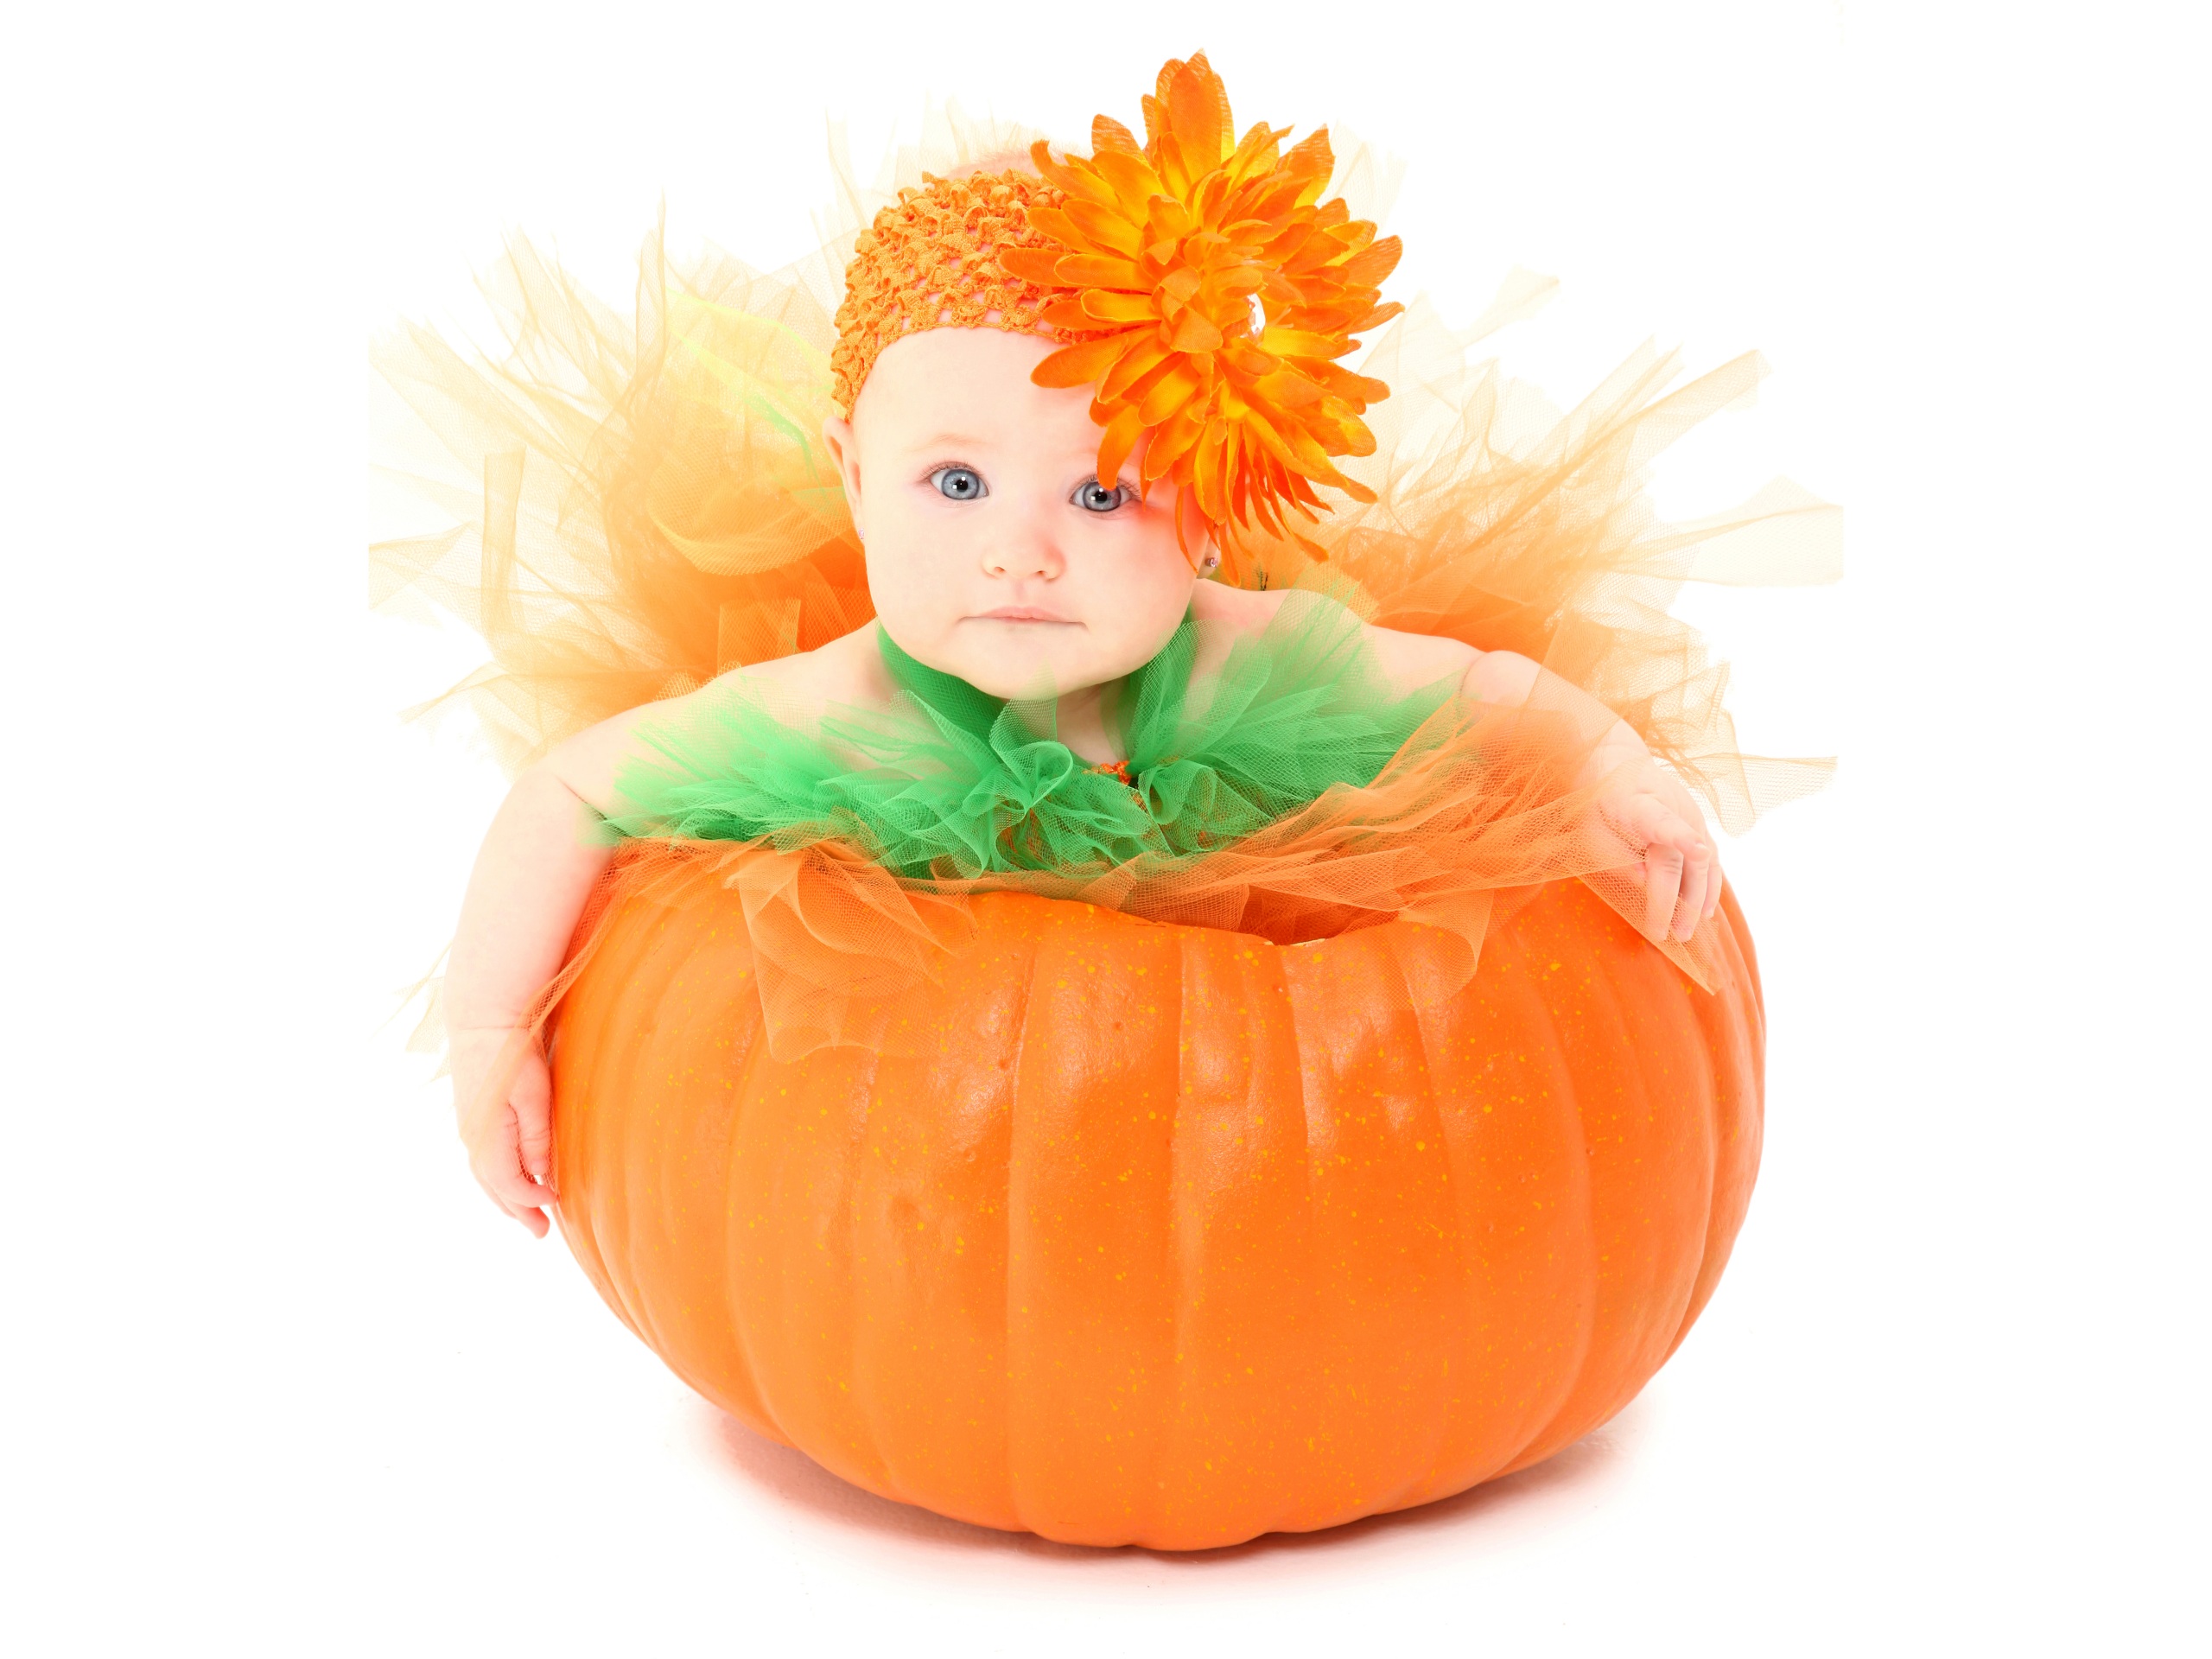 photography, baby, cute, orange flower, pumpkin